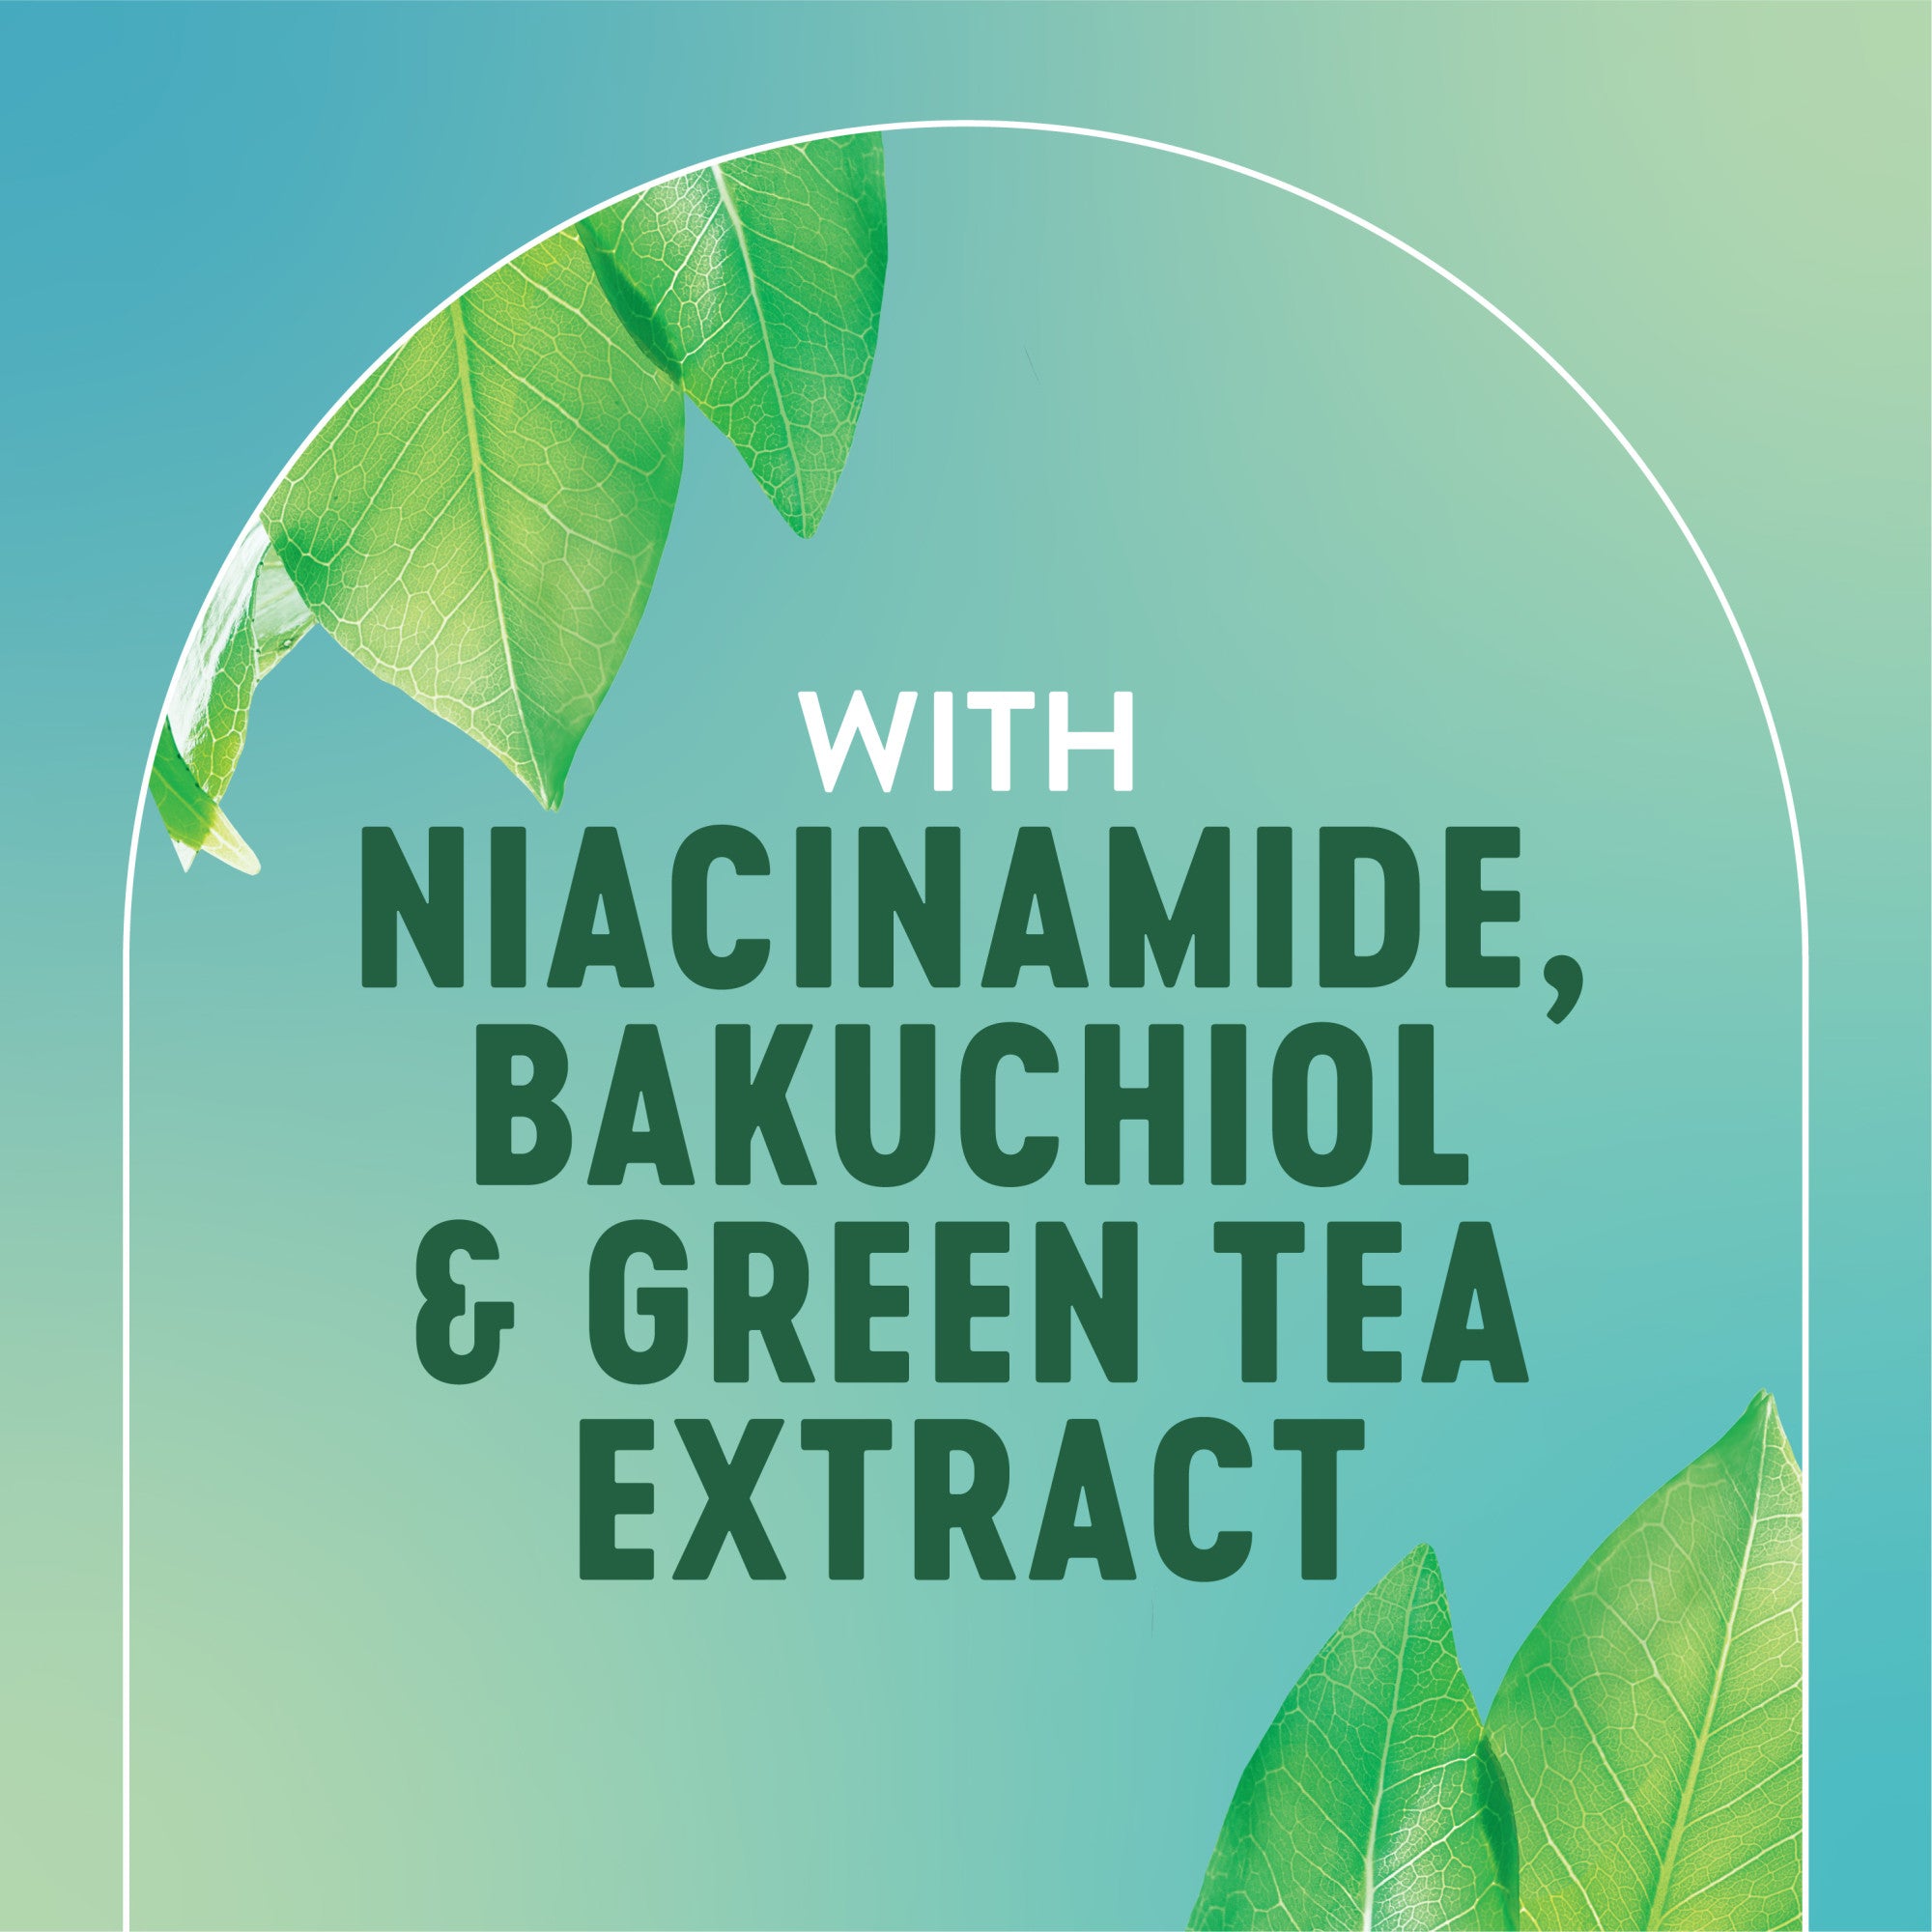 With niacinamide, bakuchiol and green tea extract.